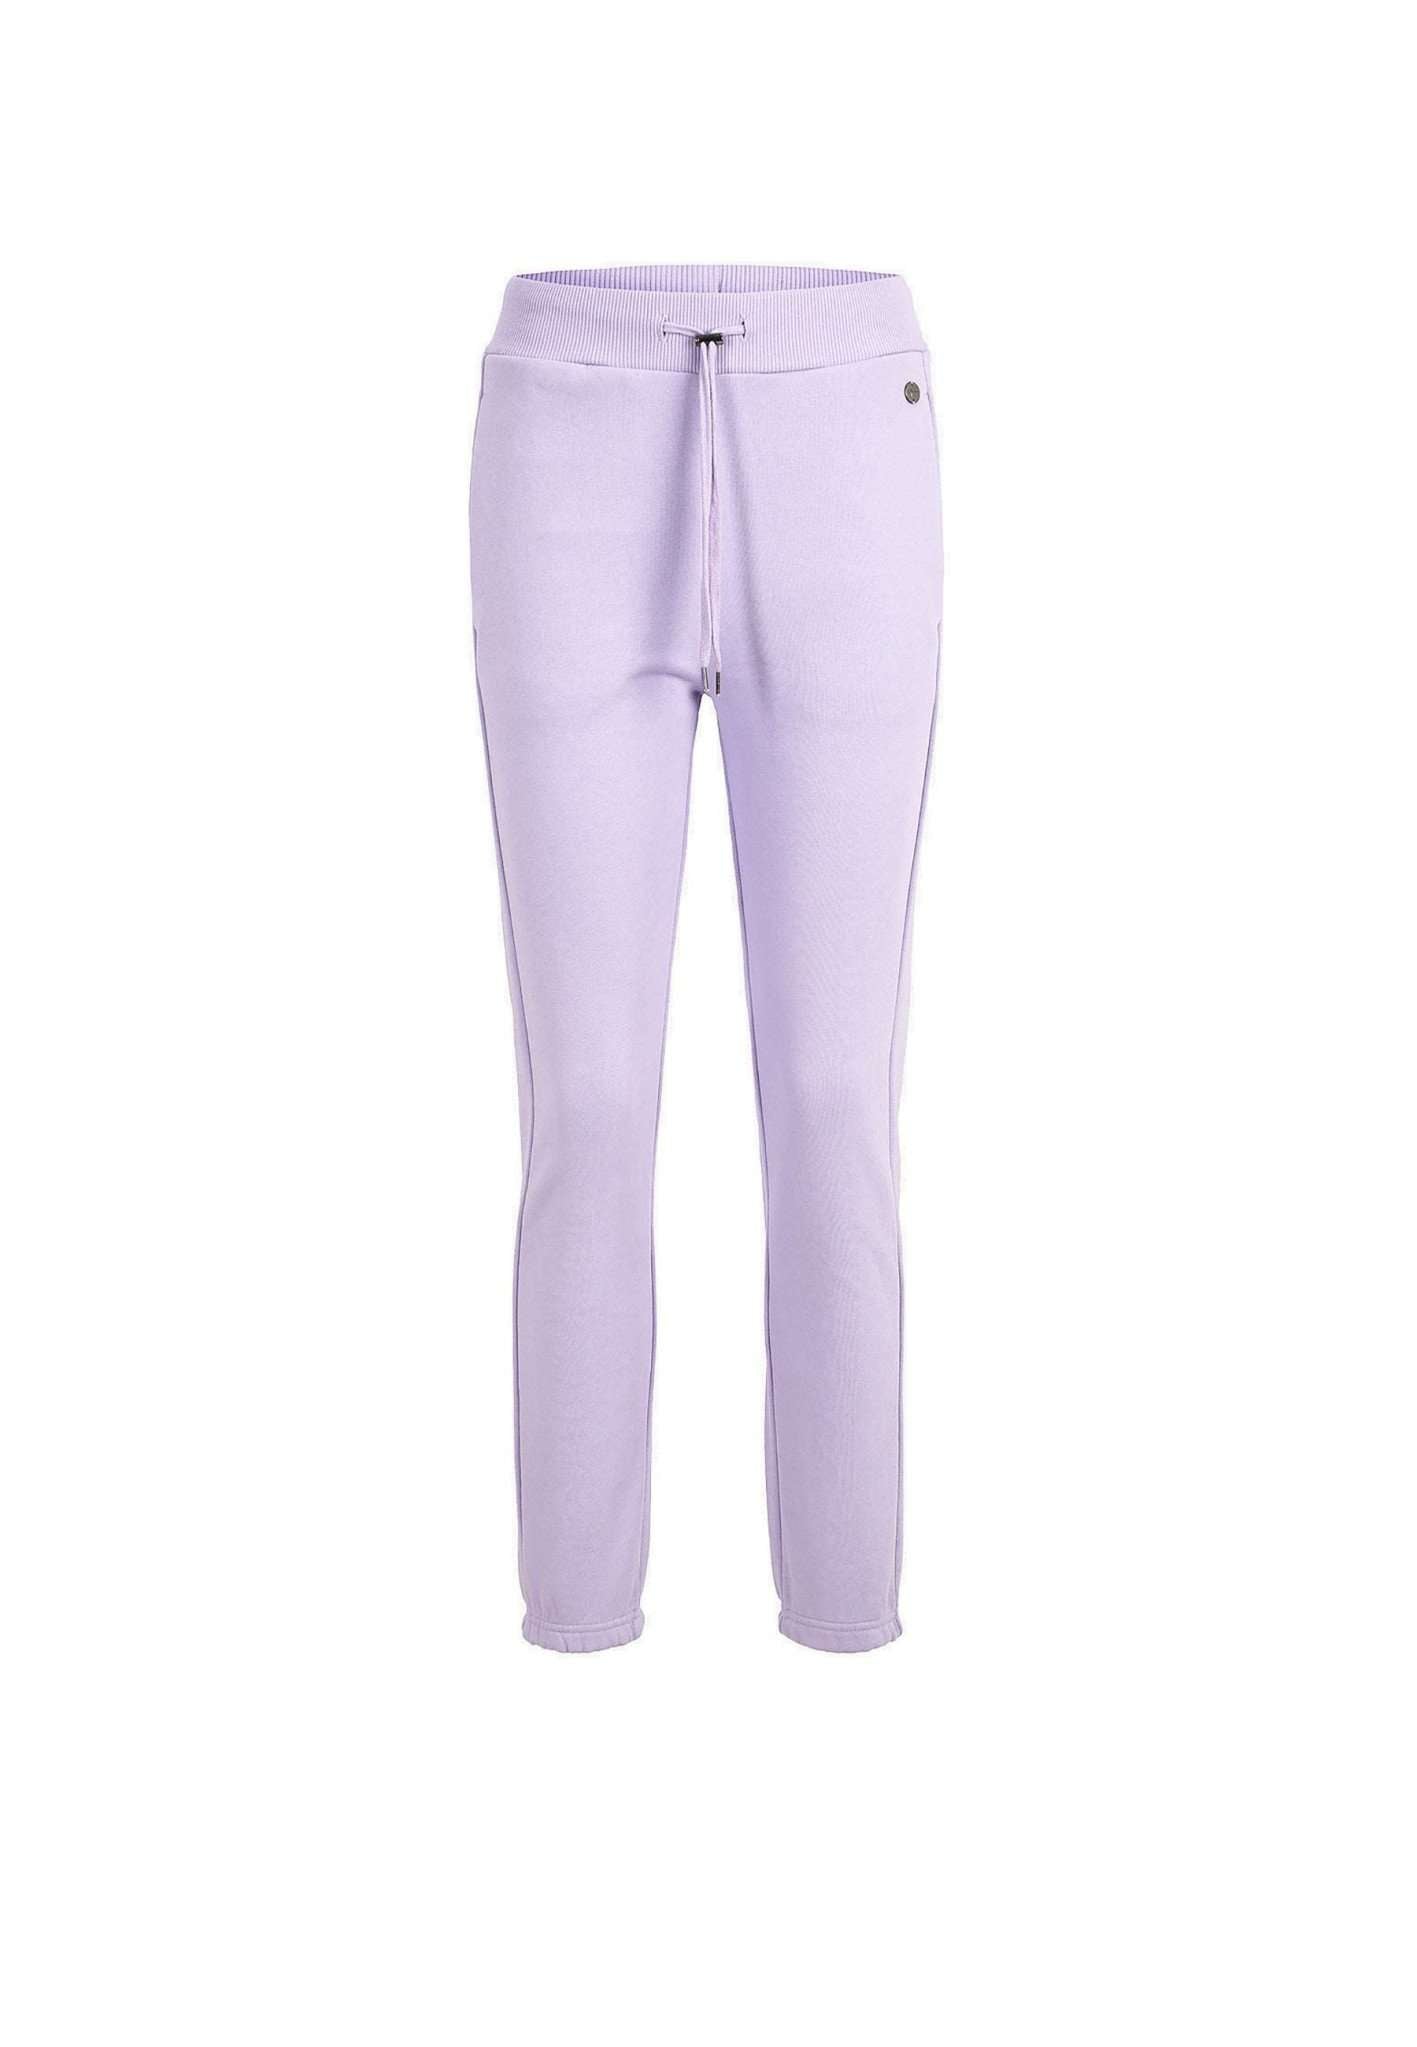 Avellino Jogger Pants in Lavender Jogginghosen Tamaris   